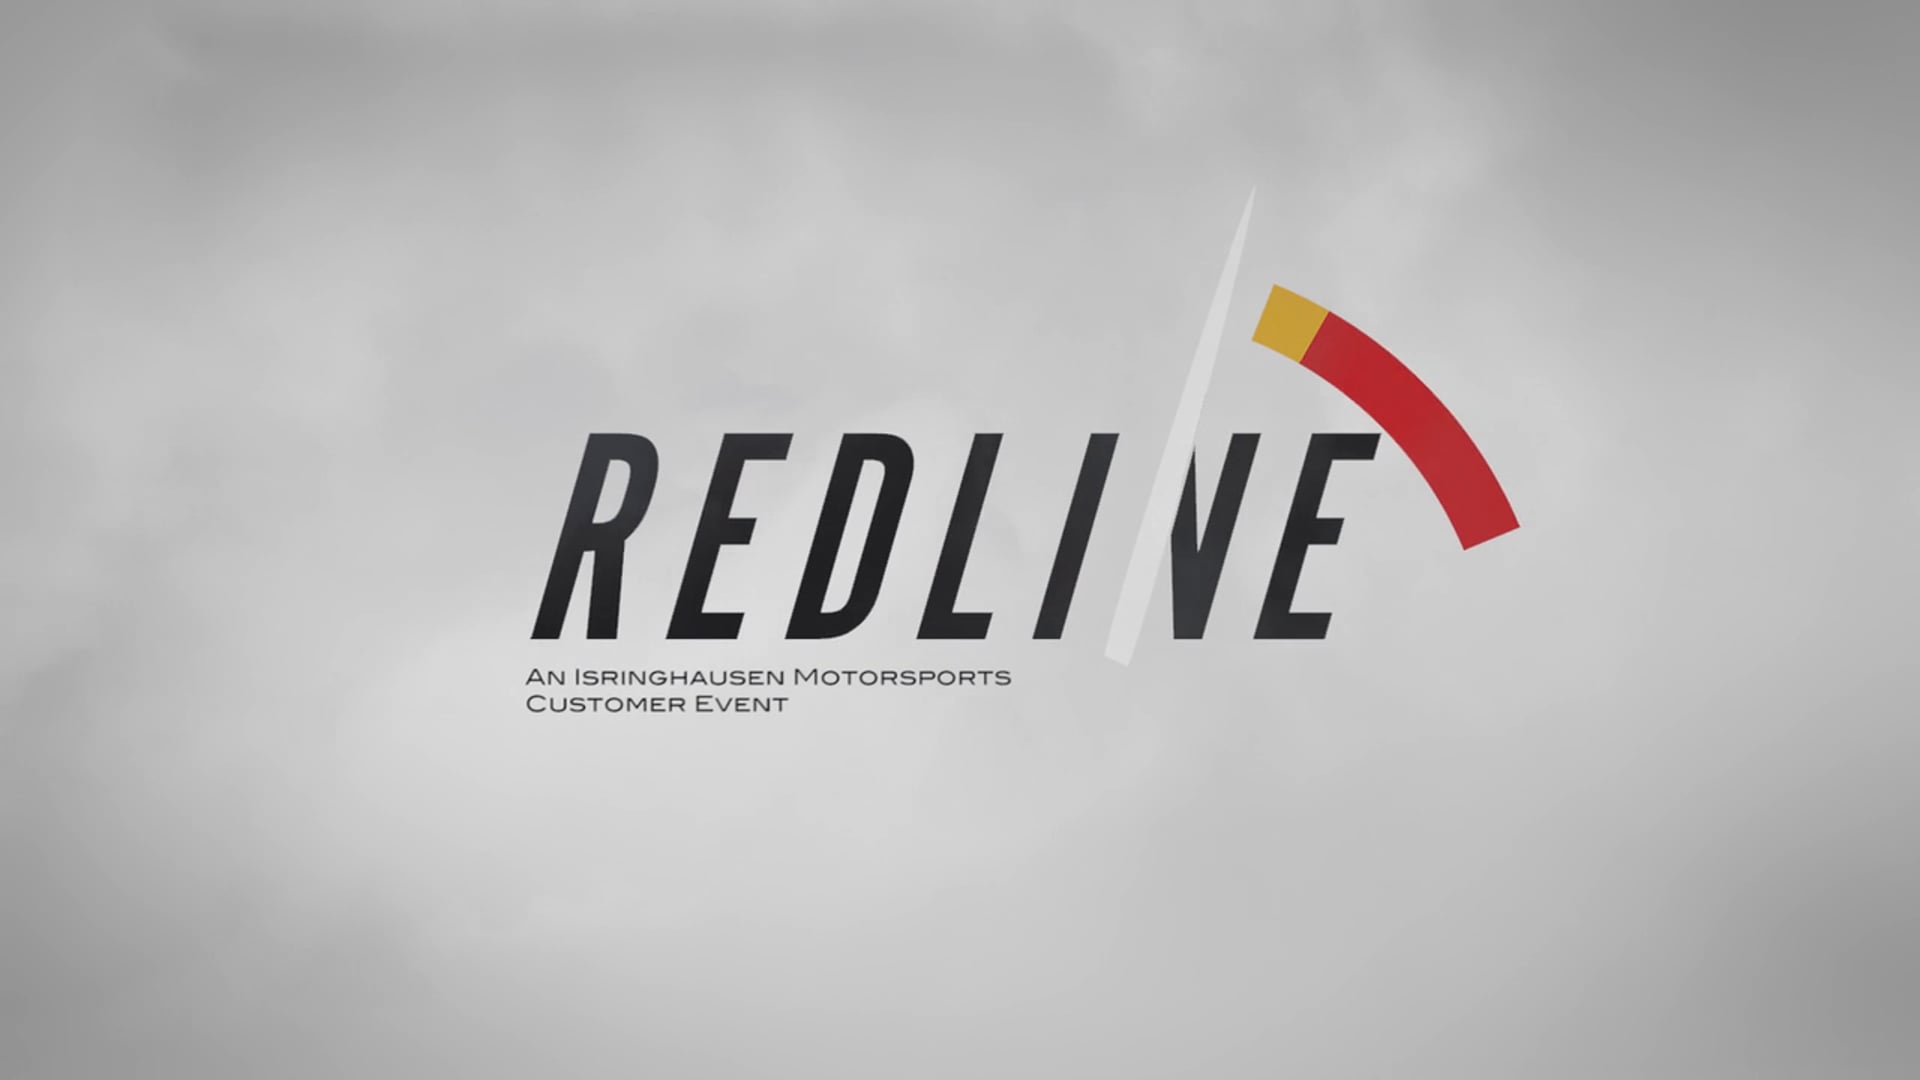 Redline - An Isringhausen Motorsports Event - Trailer